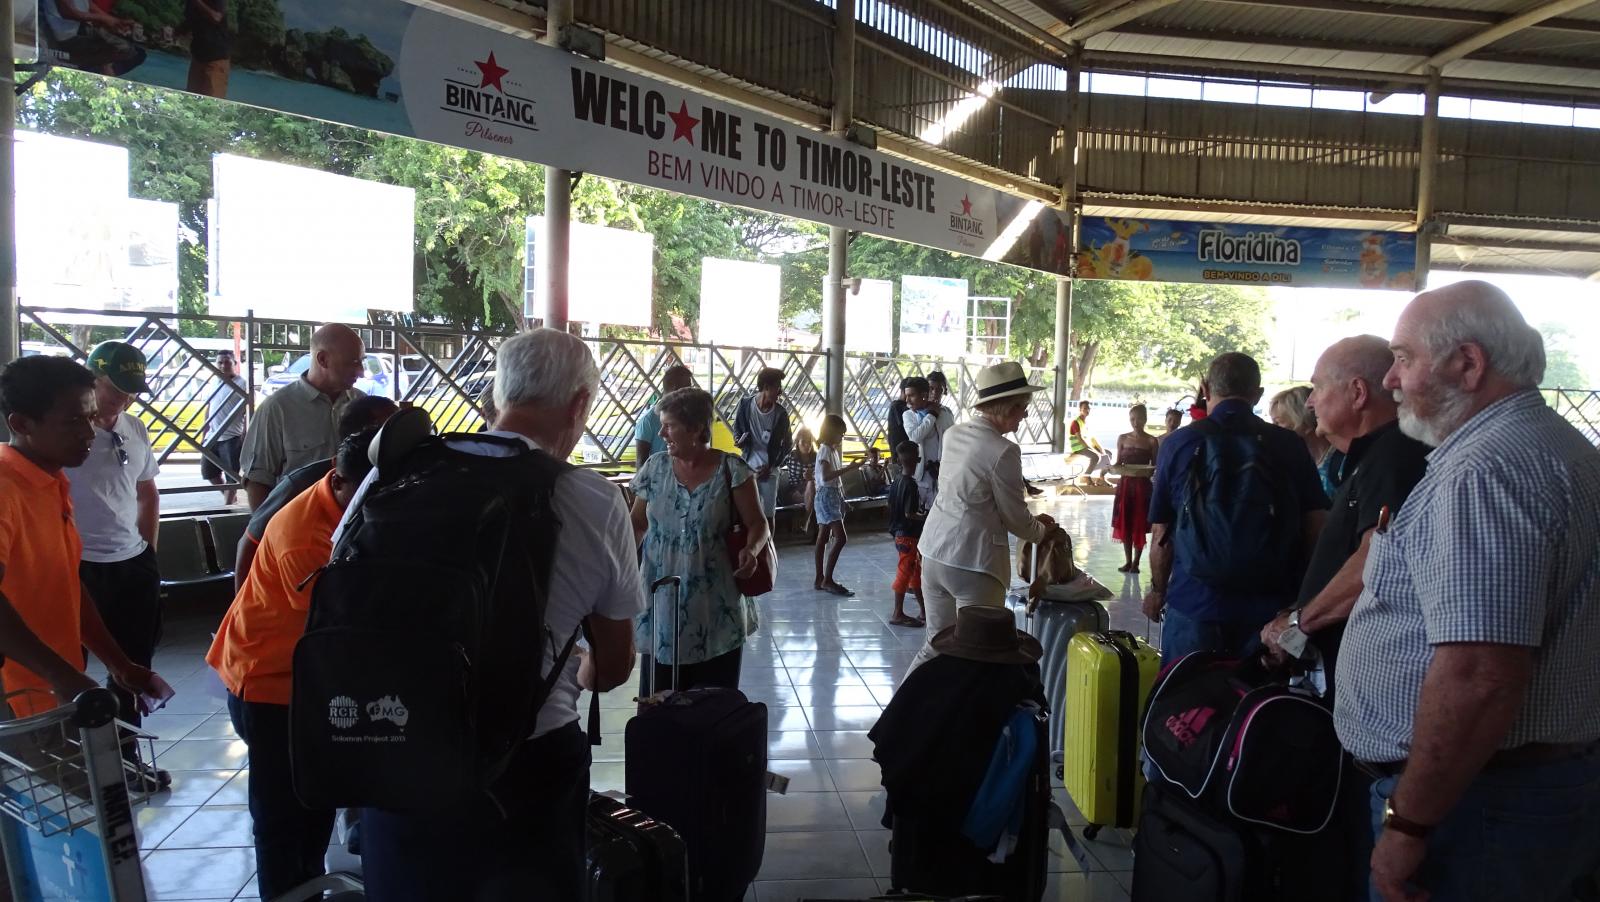 Dili - Airport - WelcomeJPG.JPG